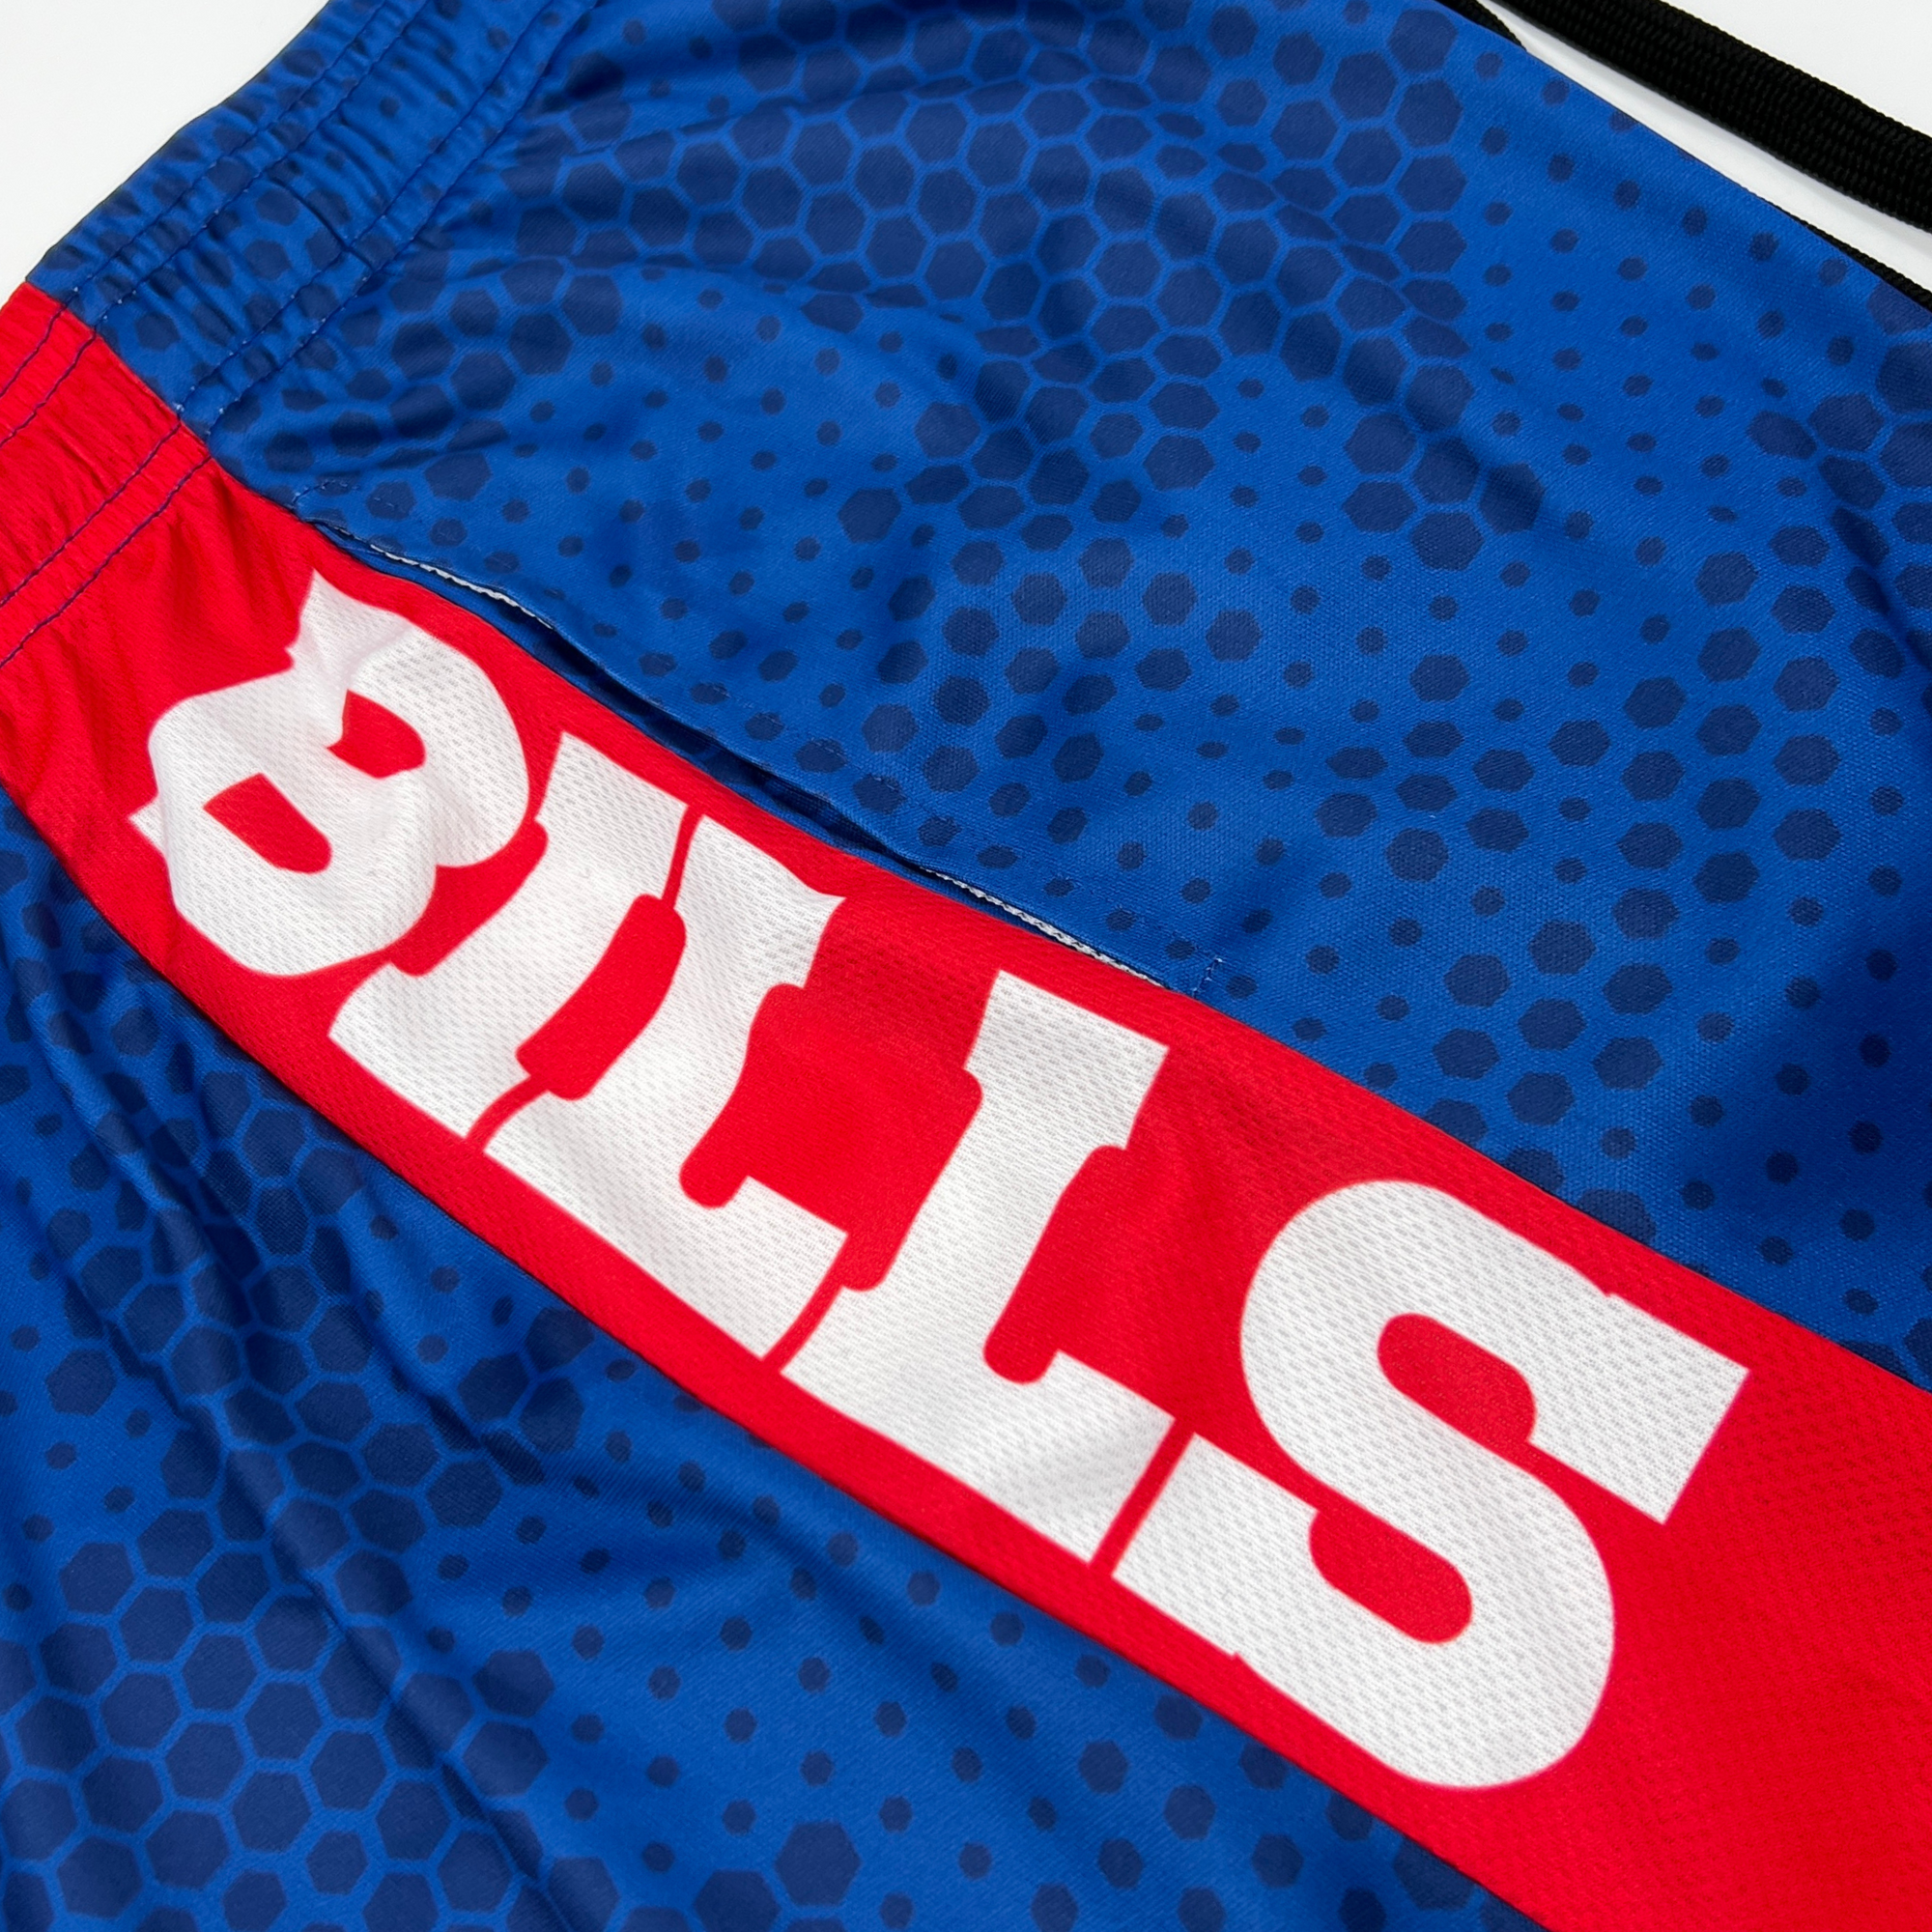 Buffalo Bills Royal Blue Camo Shorts